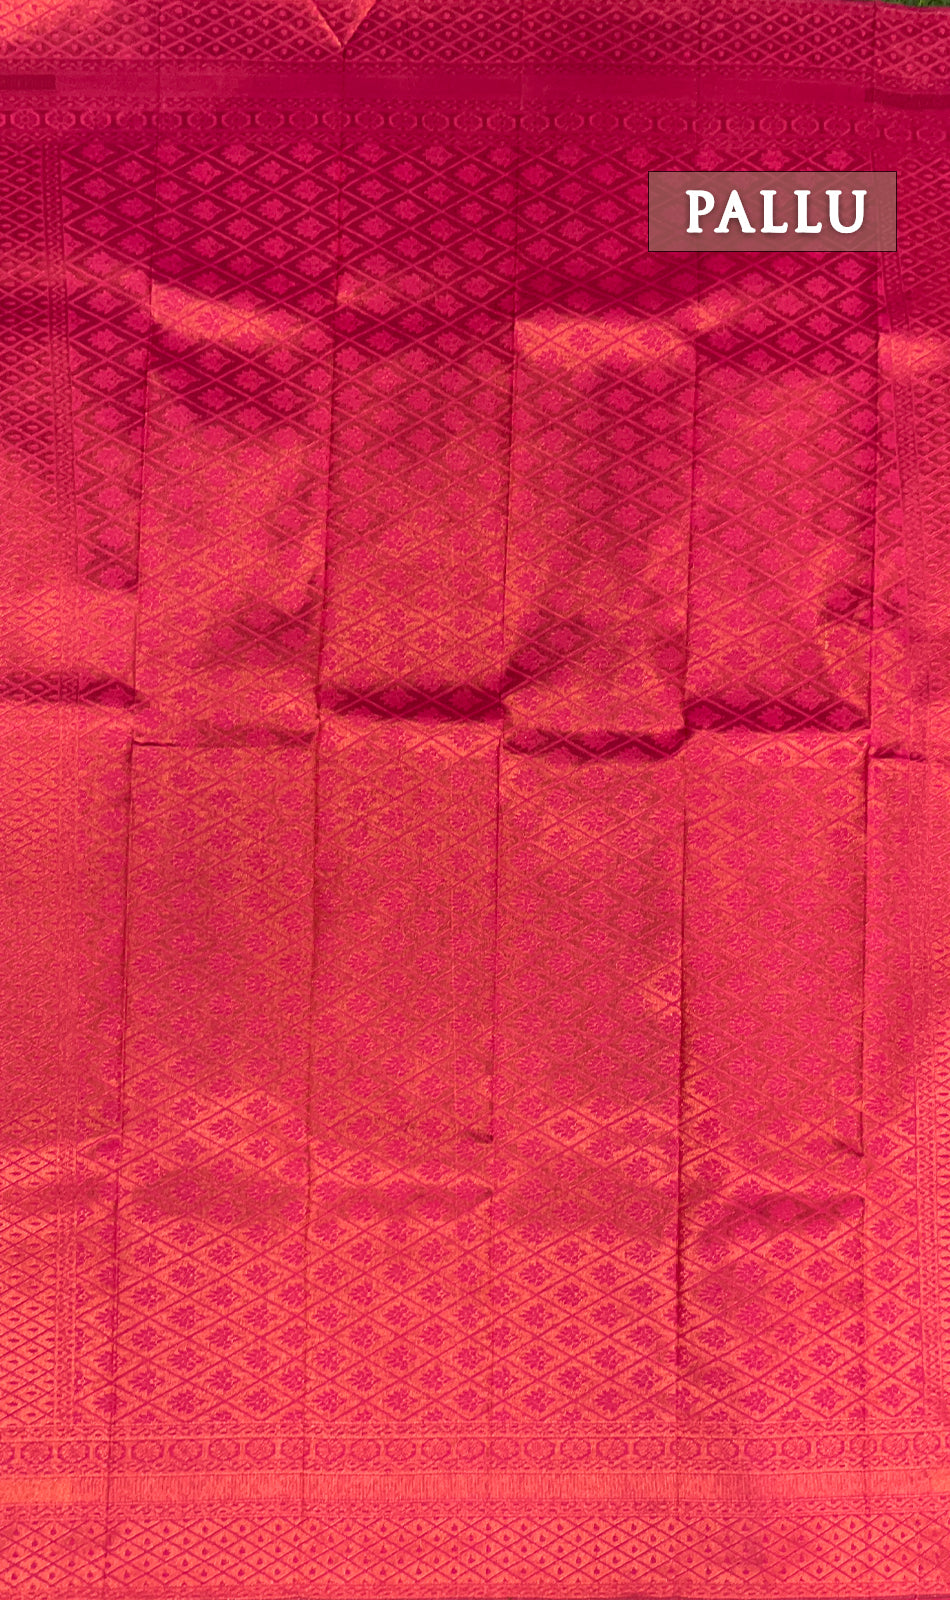 Dark pink kanchipuram silk saree